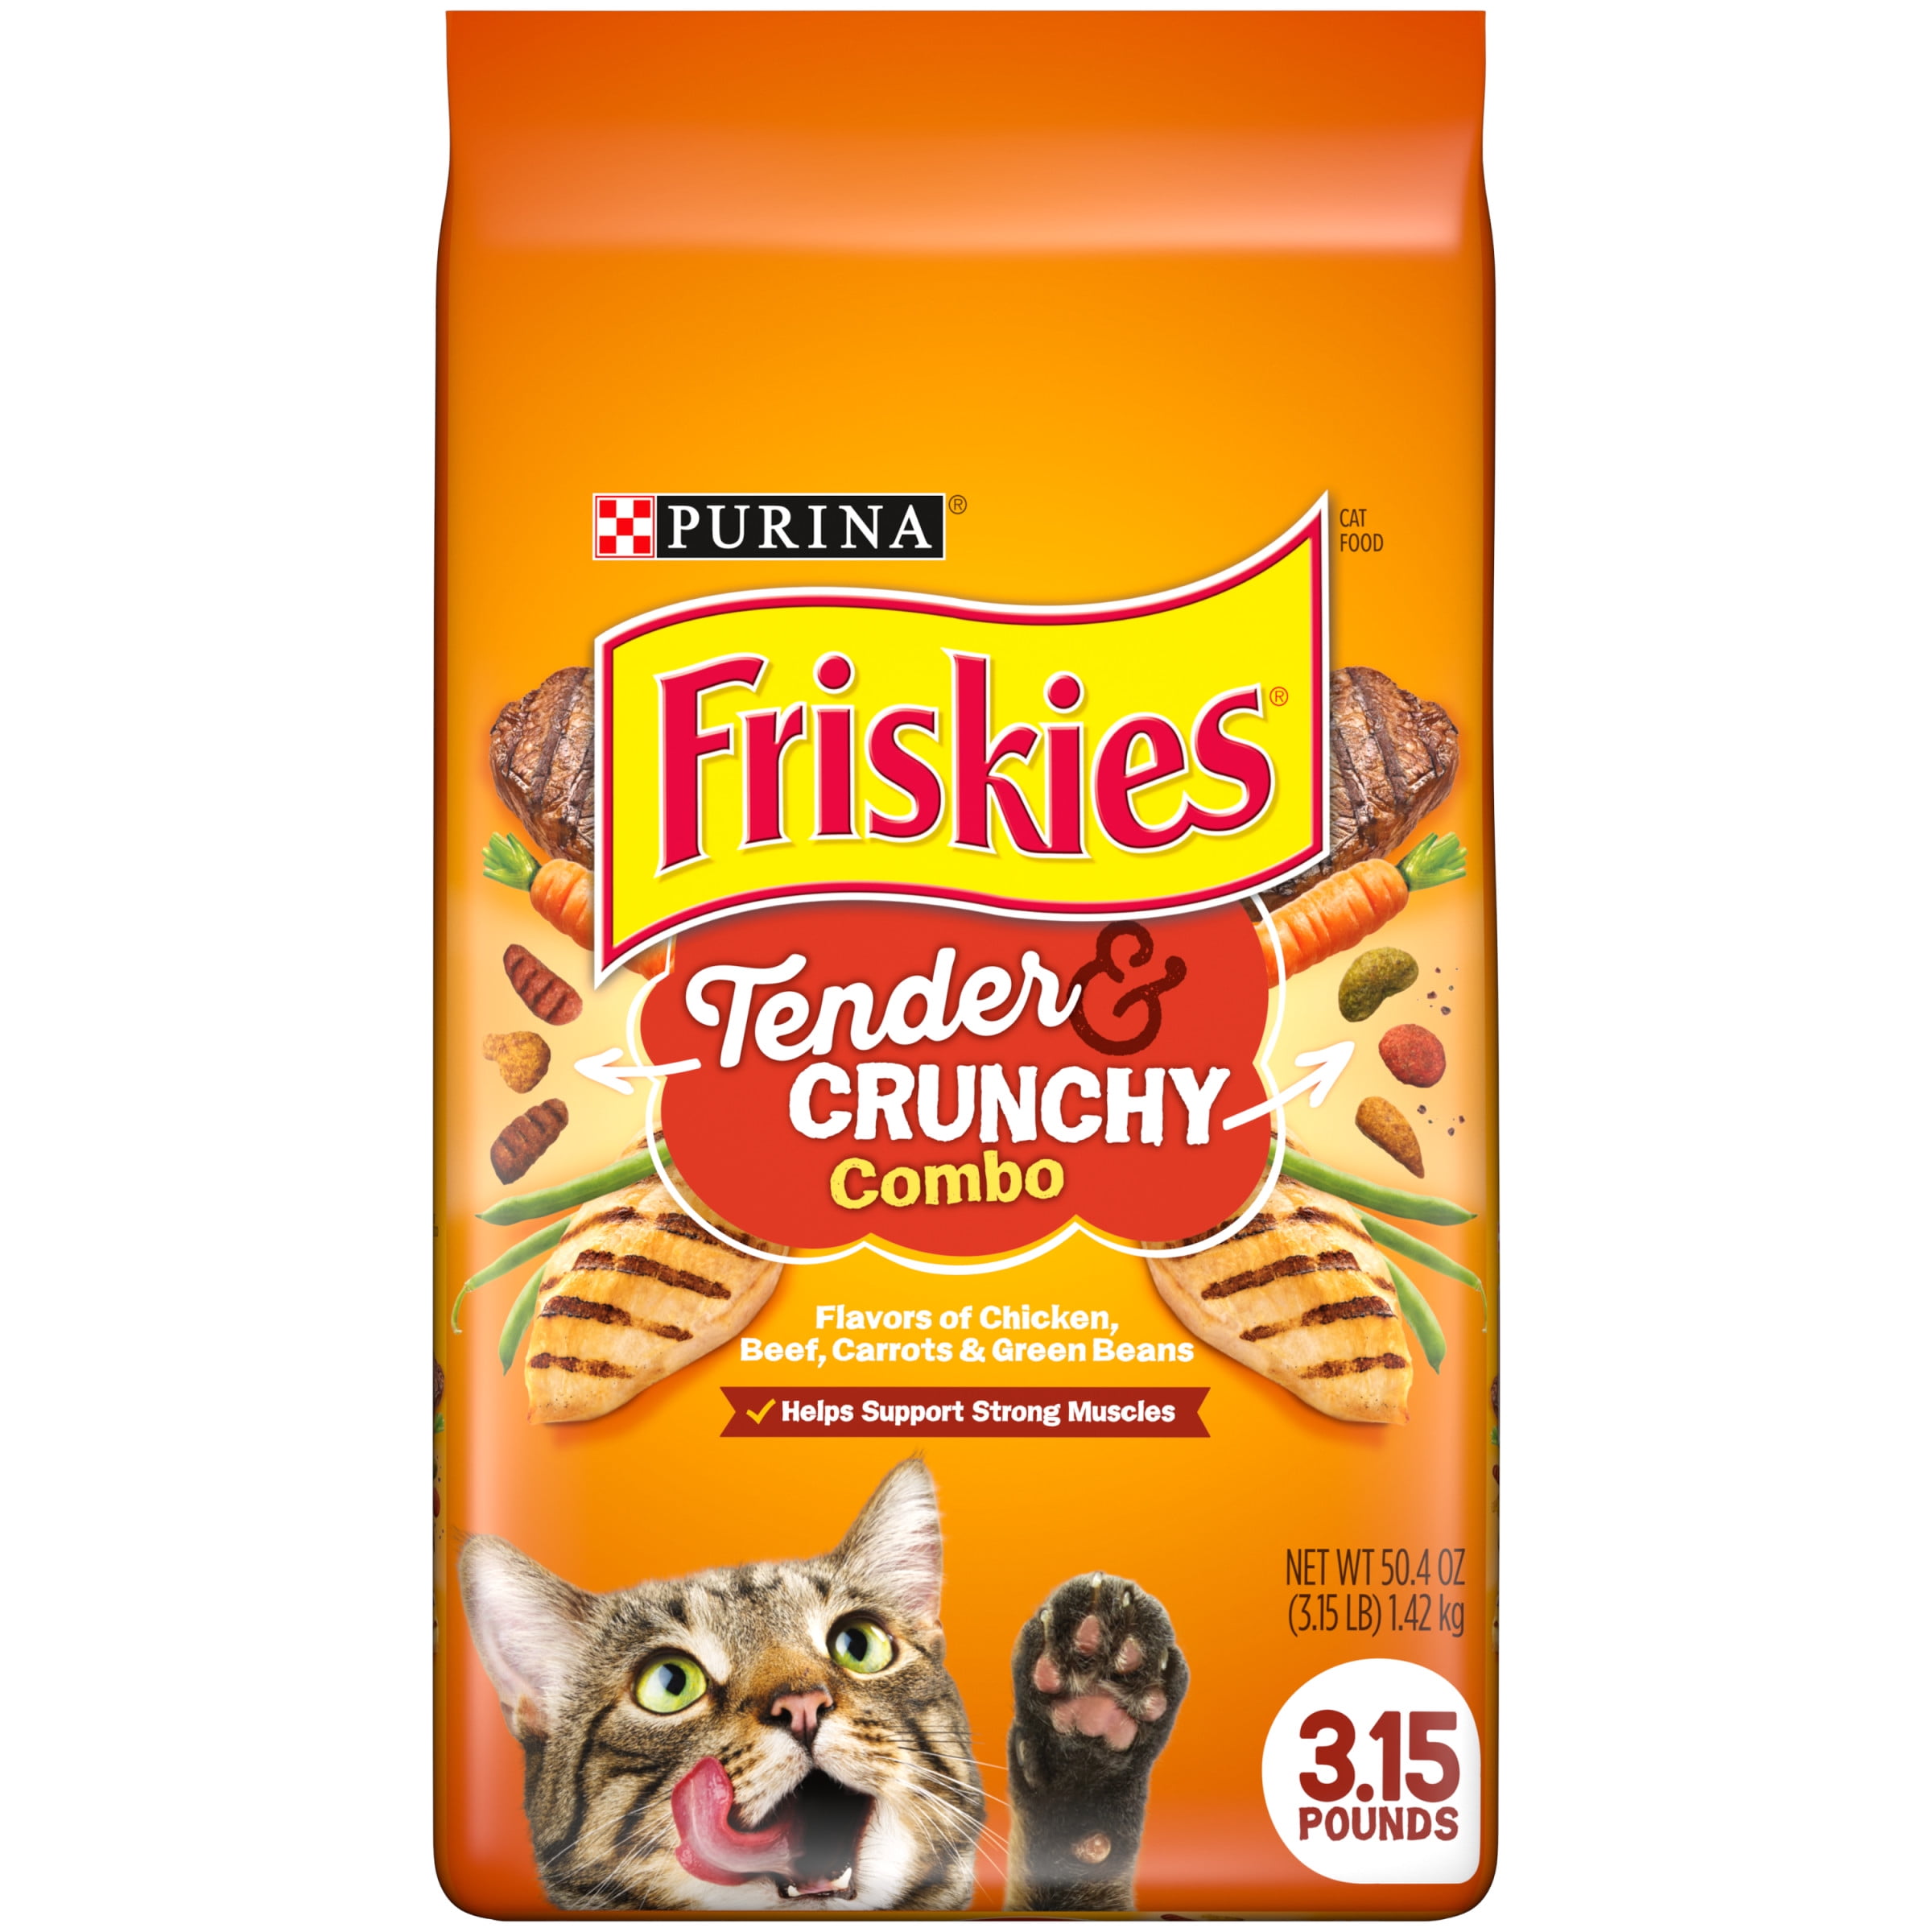 Friskies Tender & Crunchy Combo Dry Cat Food, 3.15 lb Bag